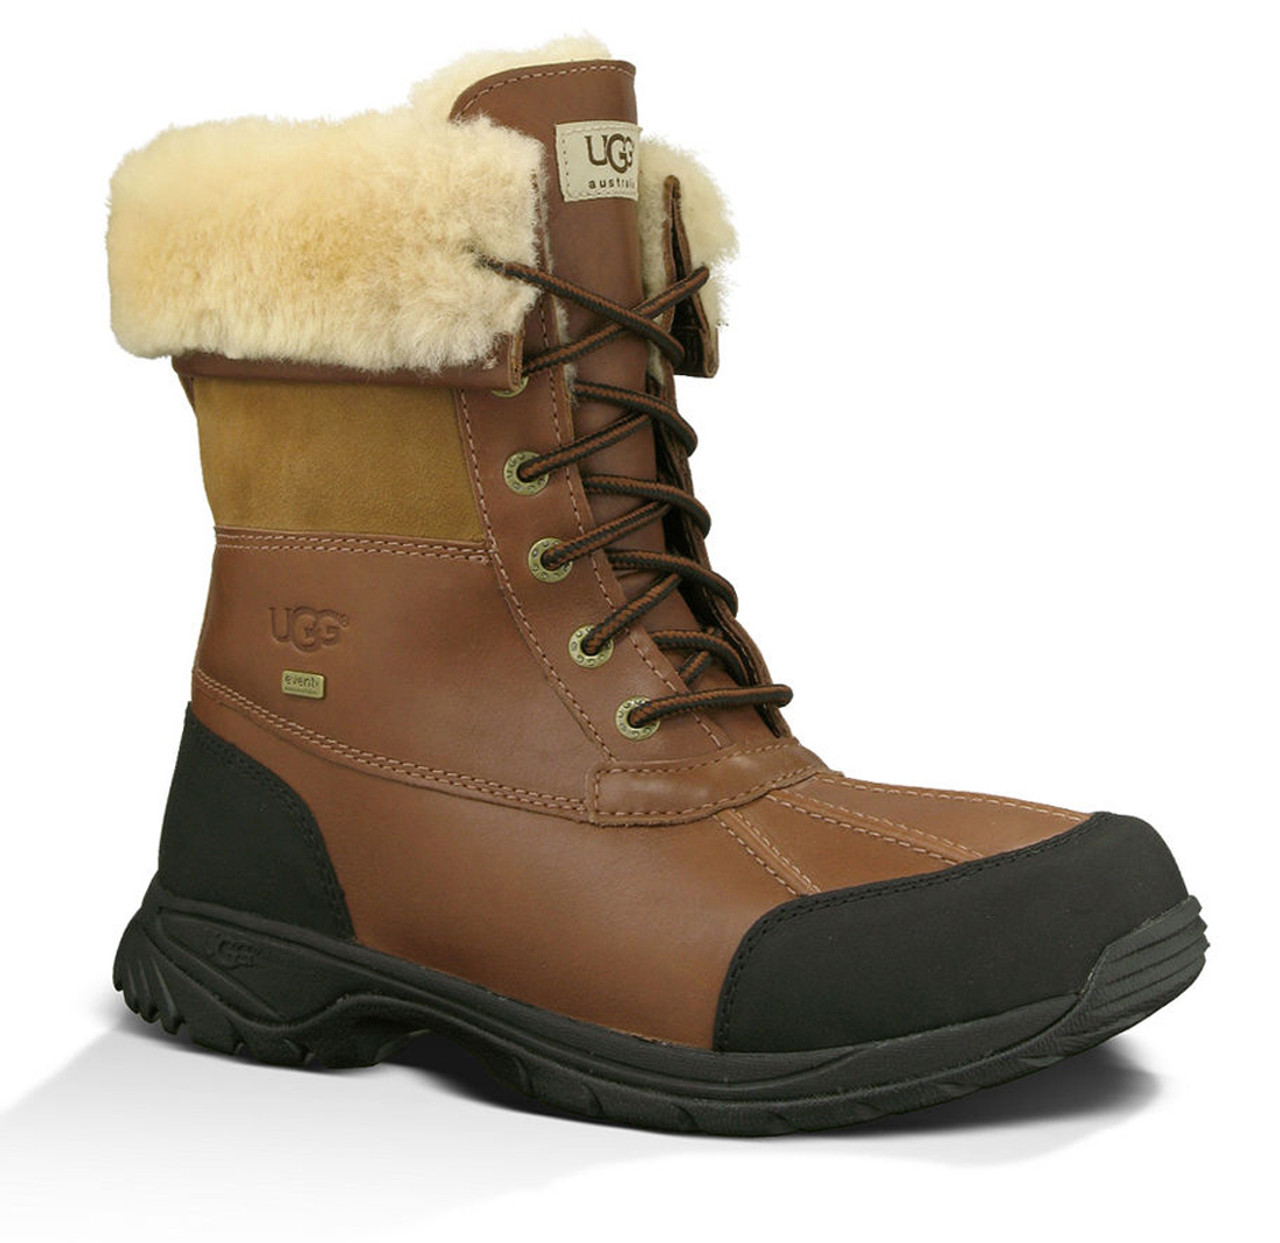 Ugg Men's Neumel Winter Boots